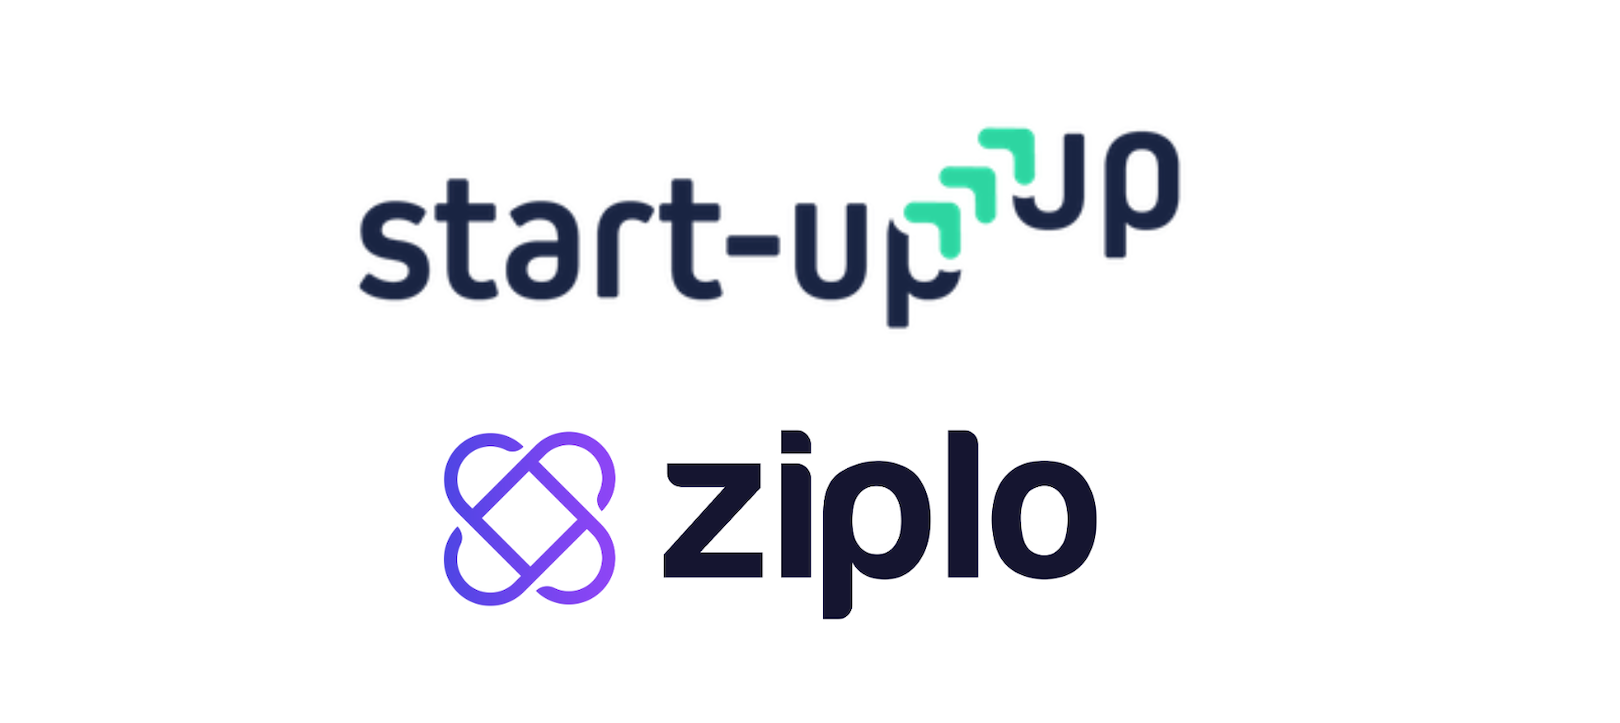 Startup up ziplo